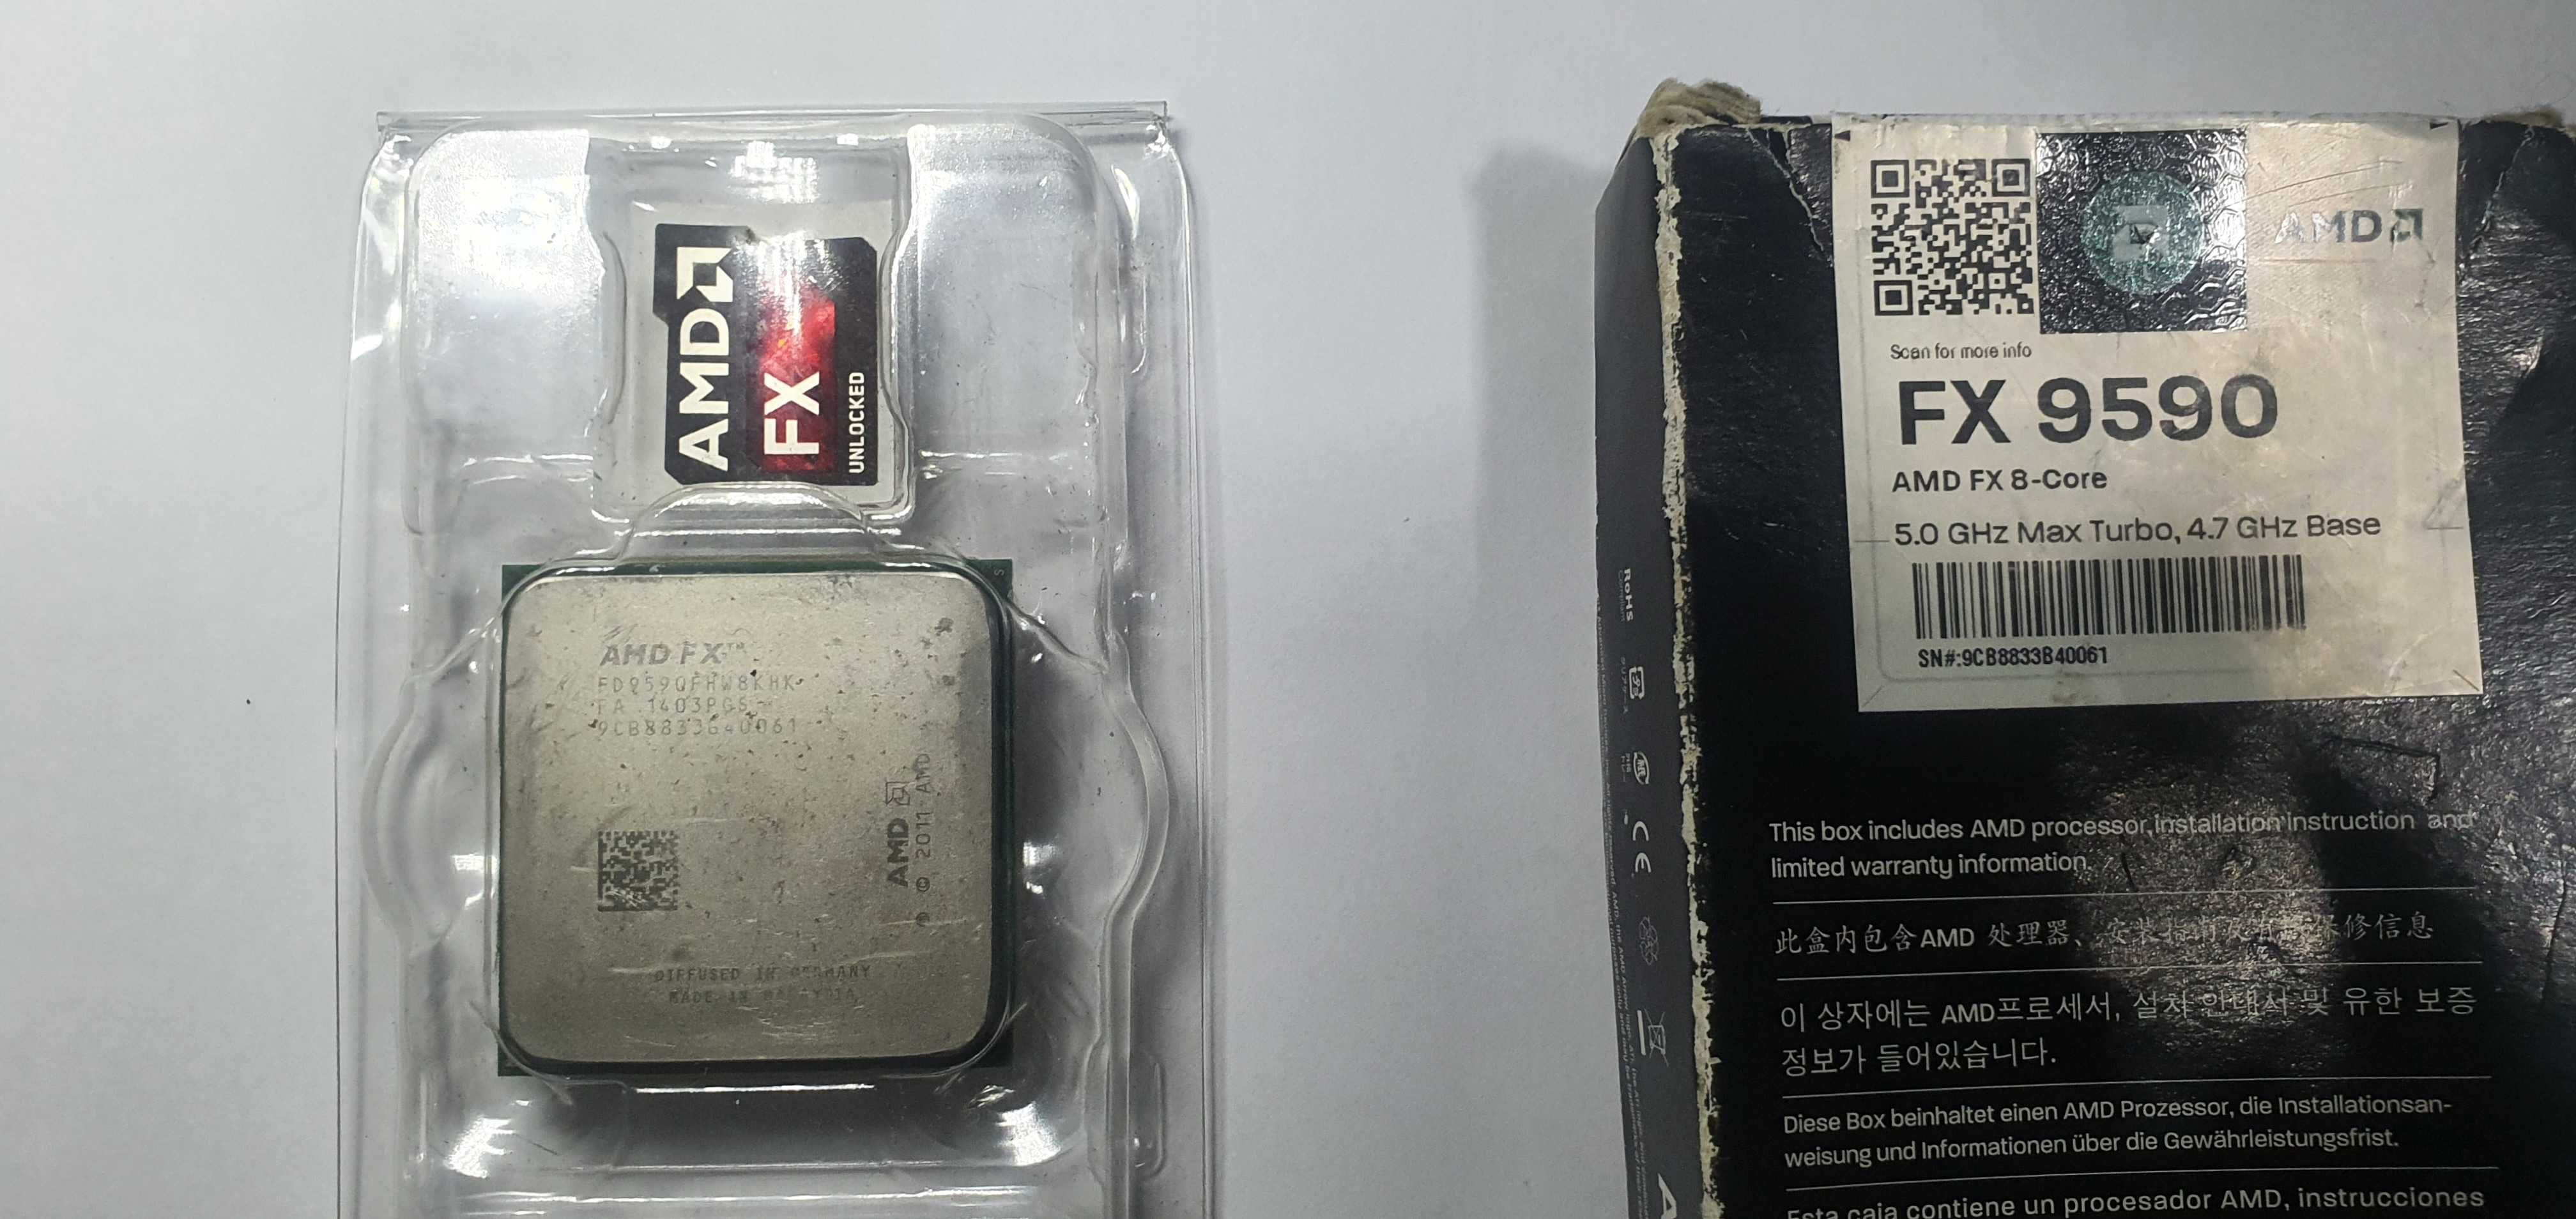 Processador AMD FX-9590 4.7Ghz   5.0Ghz Max Turbo na Caixa